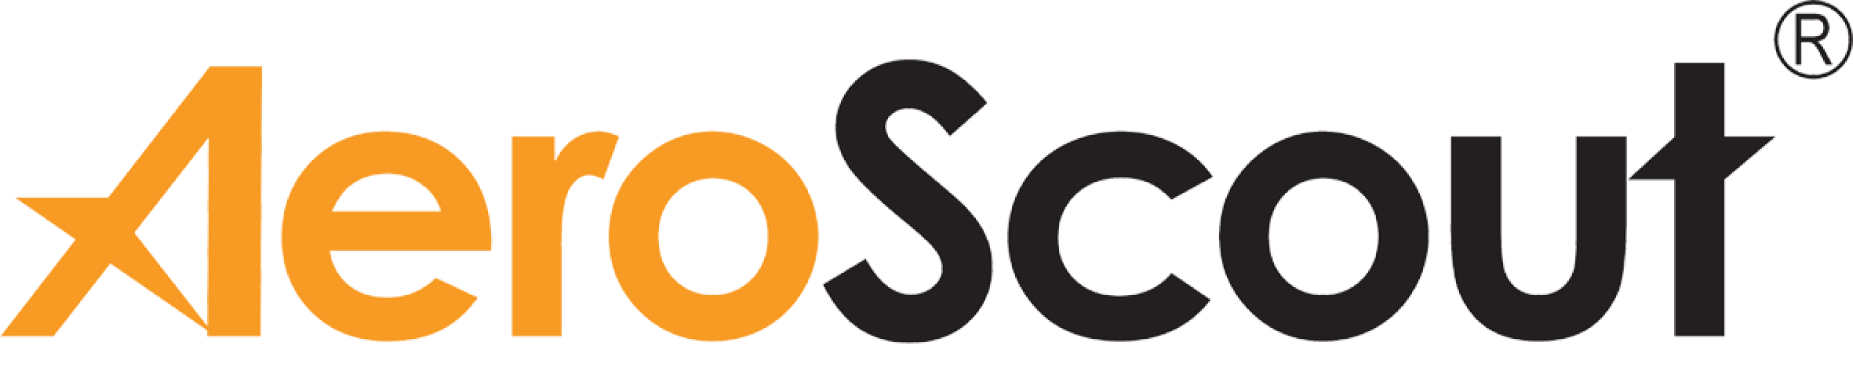 AeroScout logo